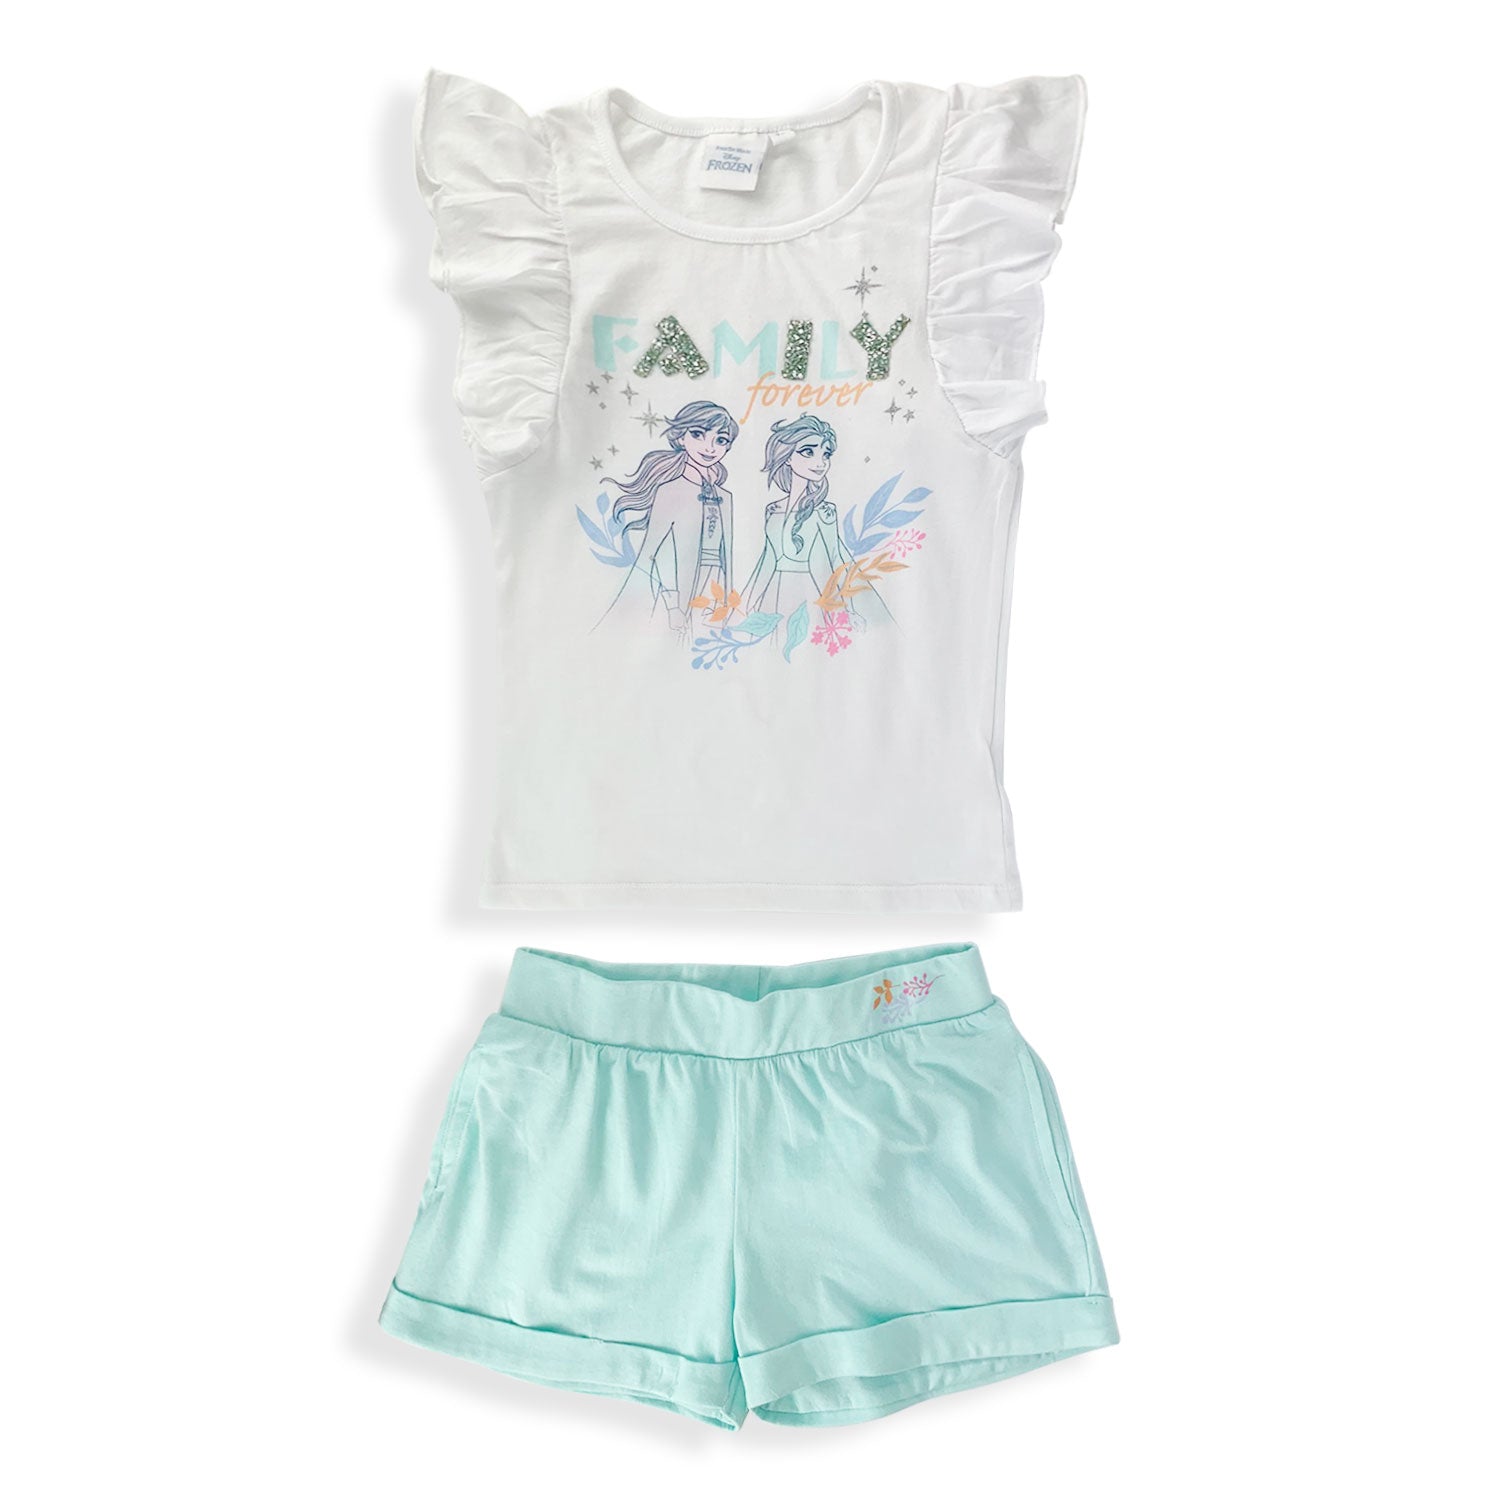 Pigiama corto bambina Disney Frozen completo t-shirt e pantaloncino cotone 5360